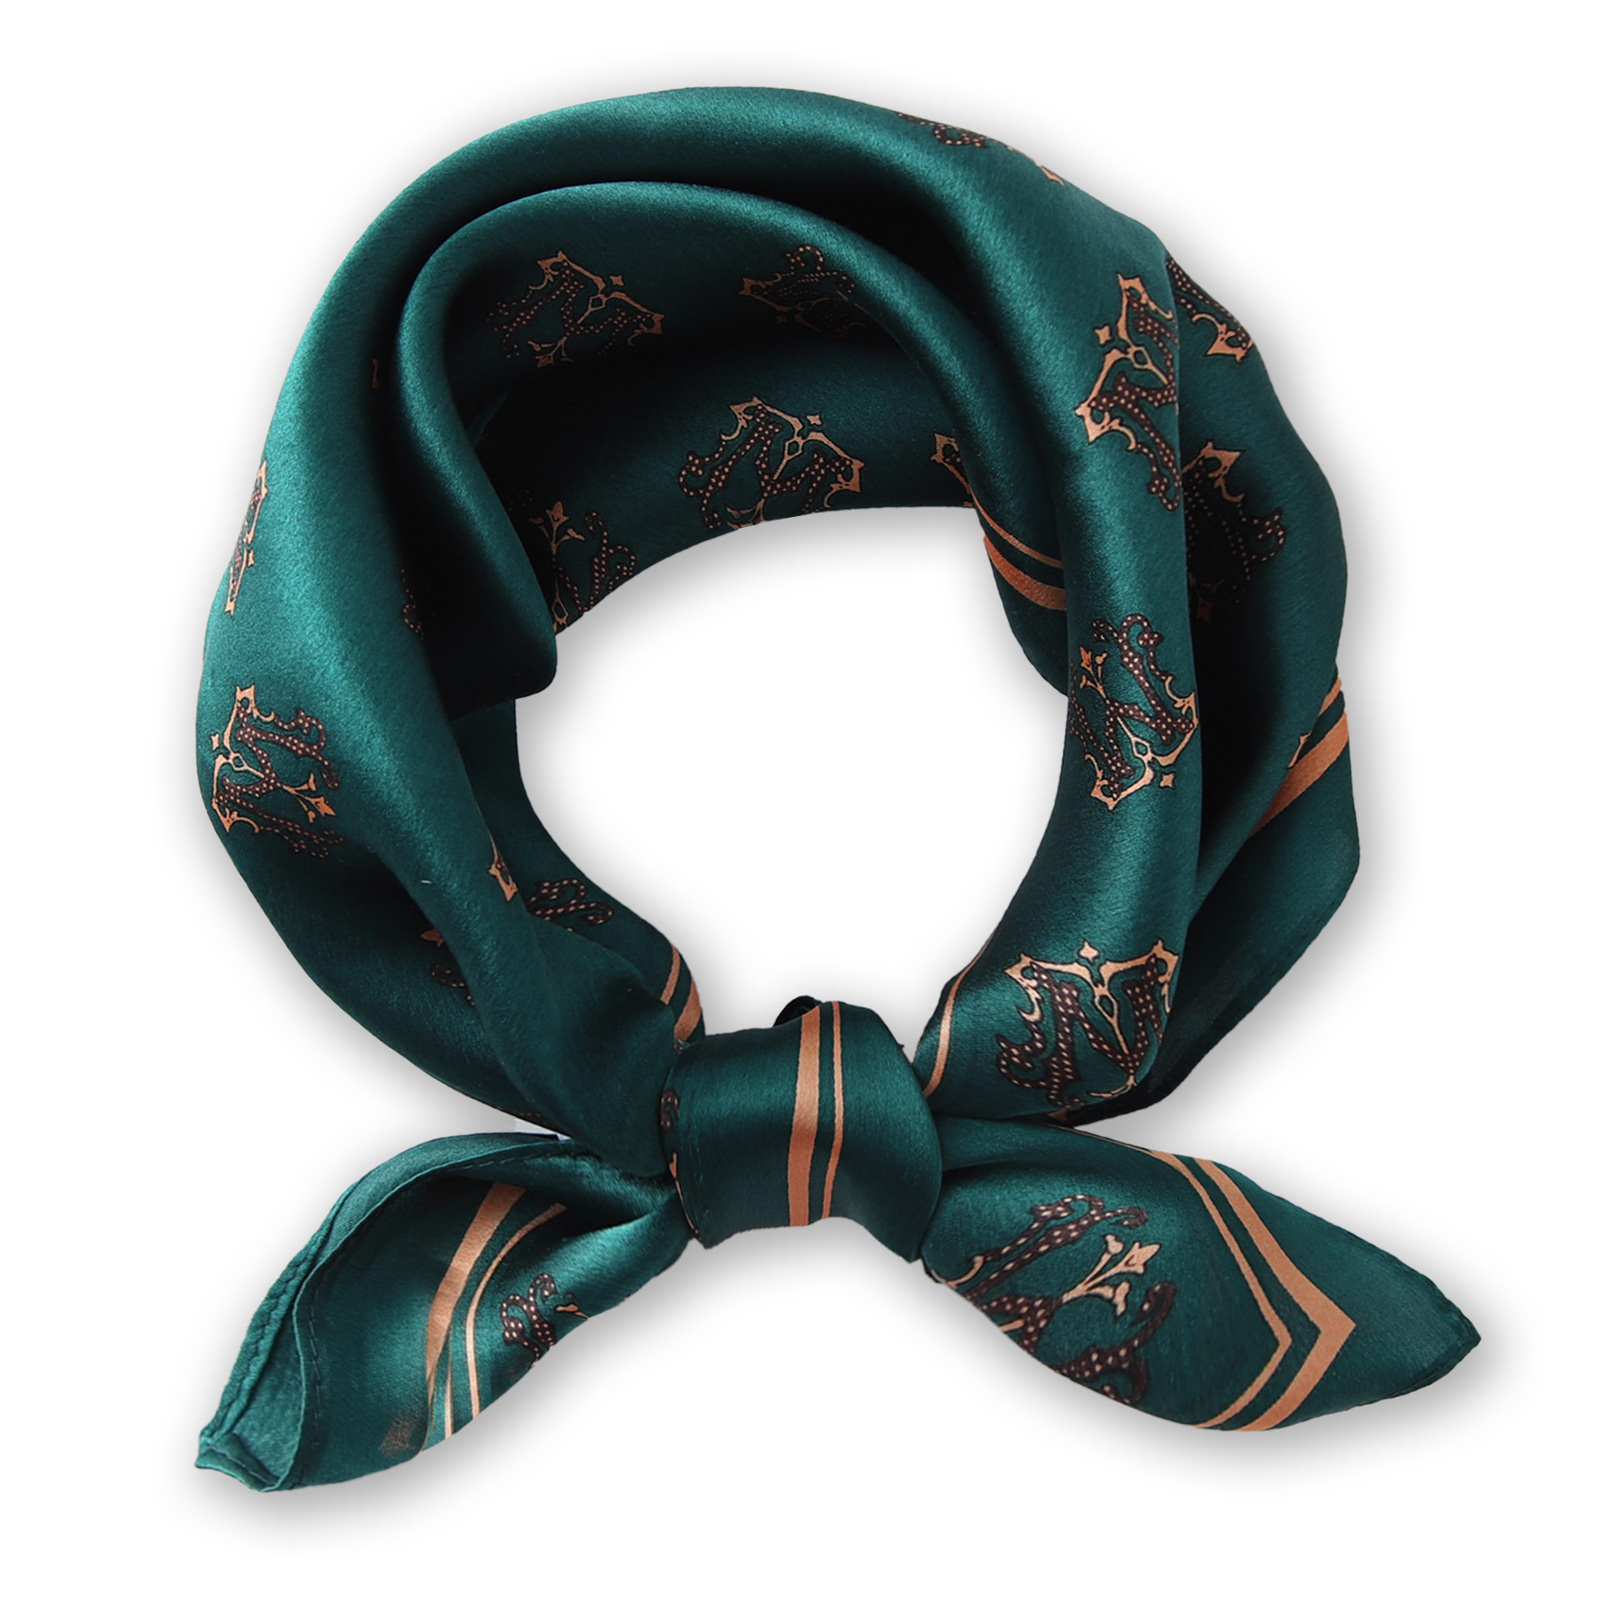 53x53cm Hot Sale Headscarf Brand Colorful Neckerchief Bandana Silk Neck Scarf